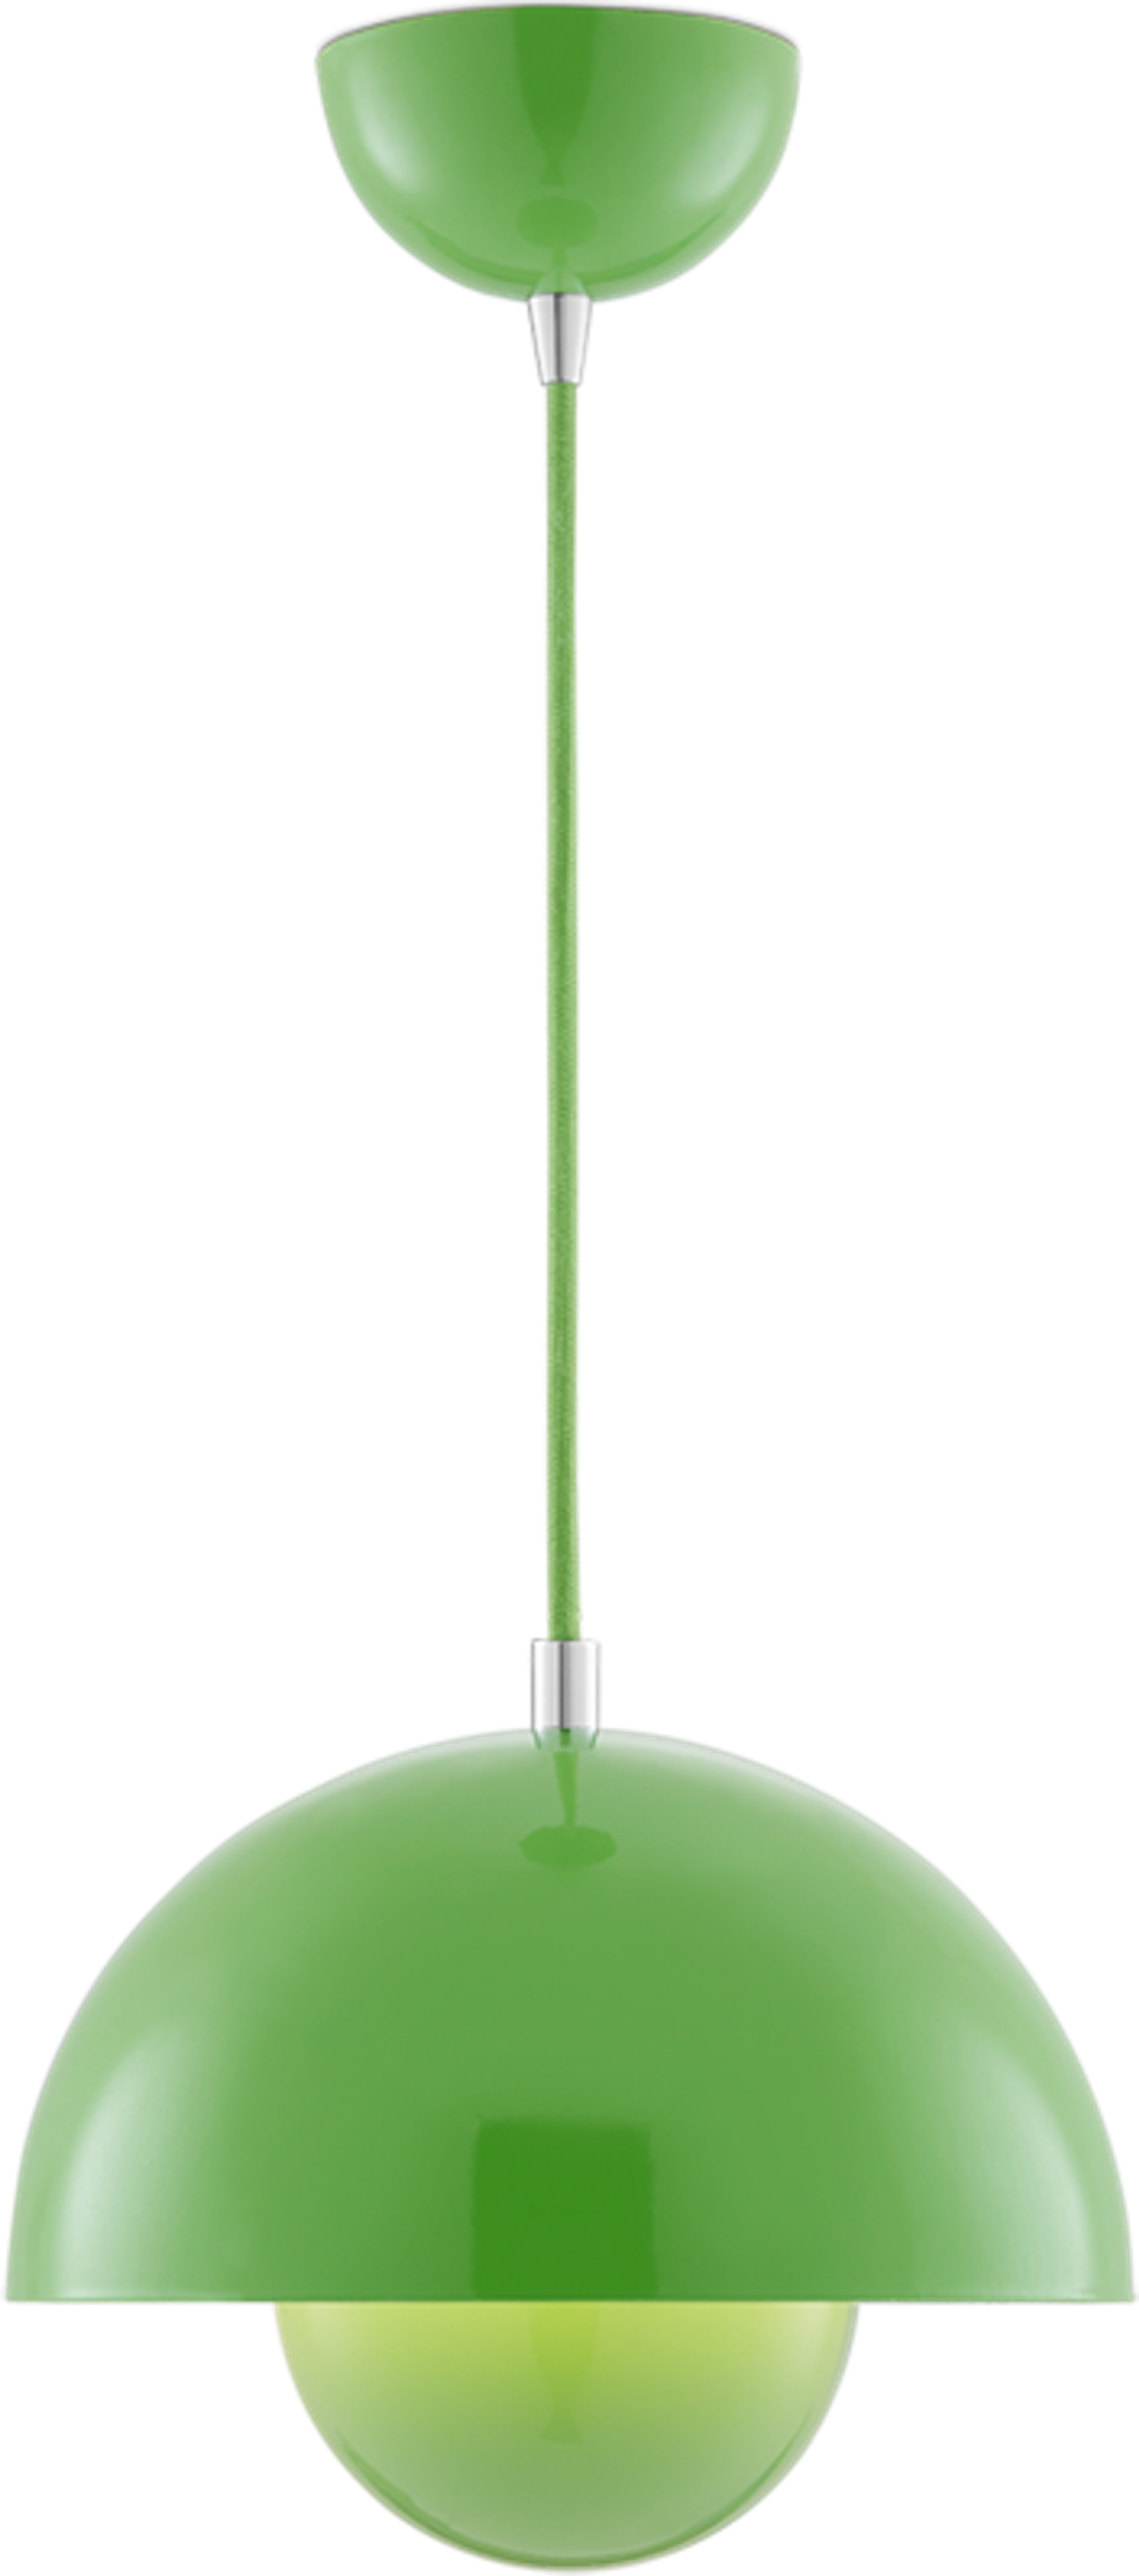 Blomkruka lampa Green image.